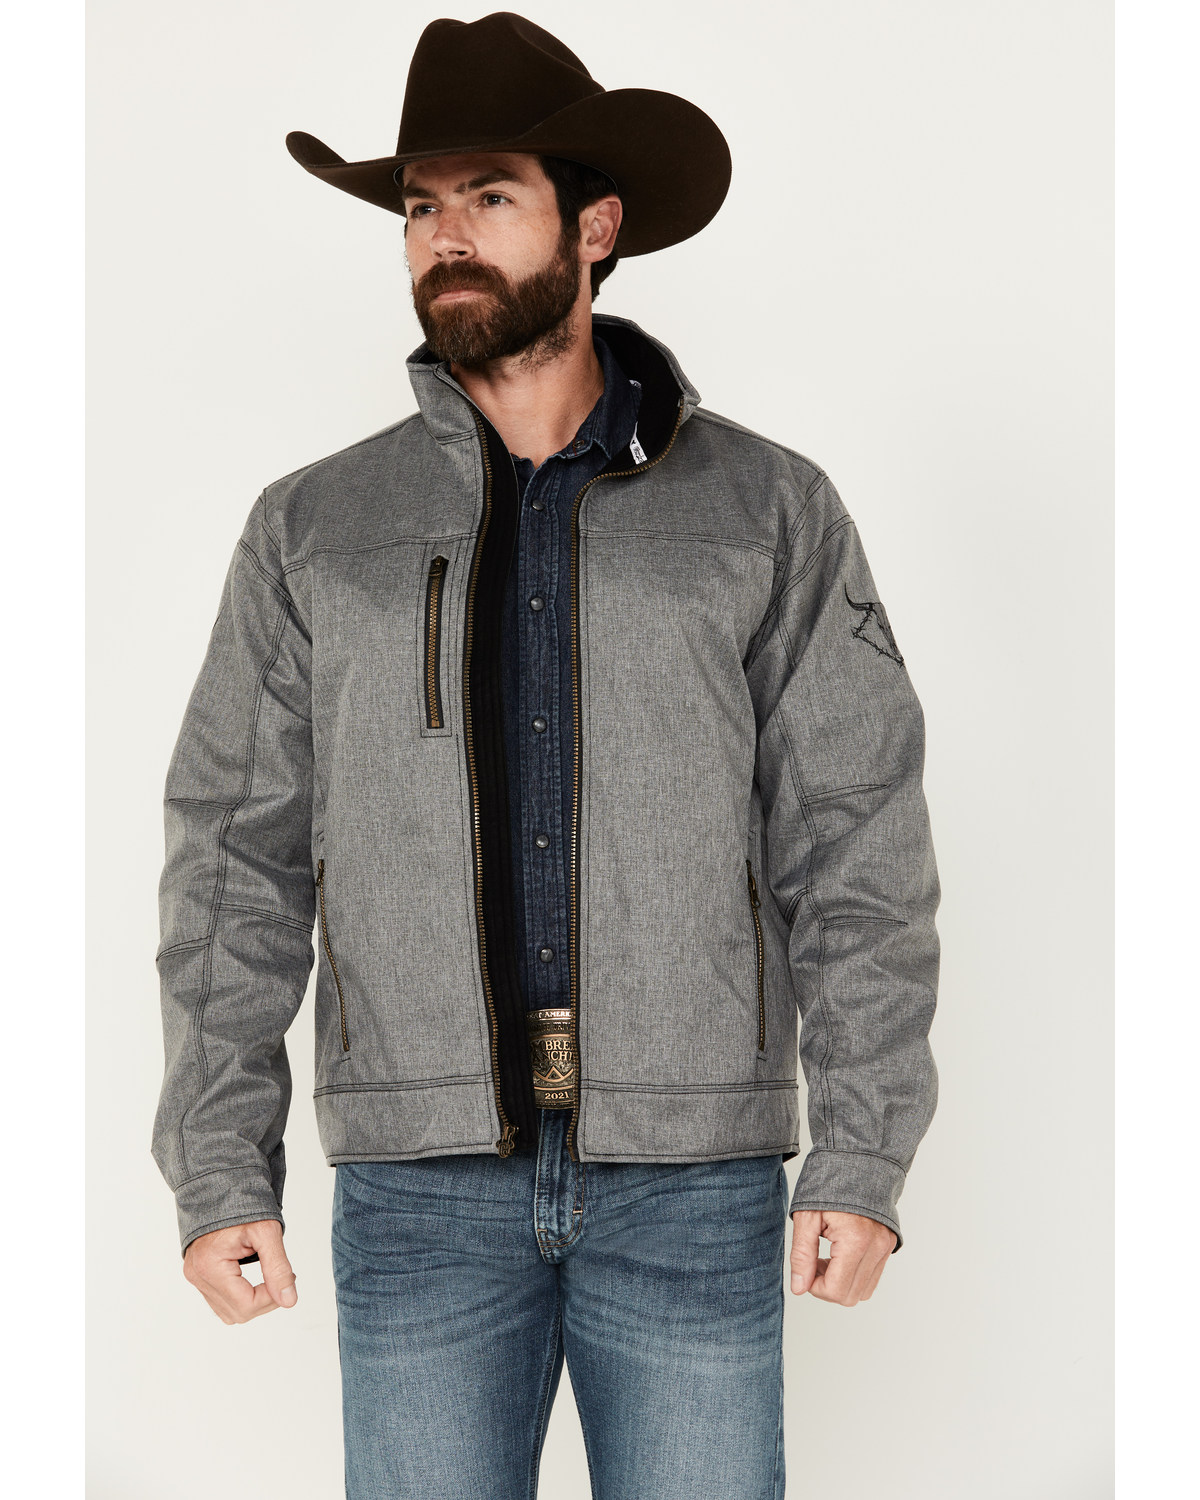 Cowboy Hardware Men's Woodsman Tech Jacket